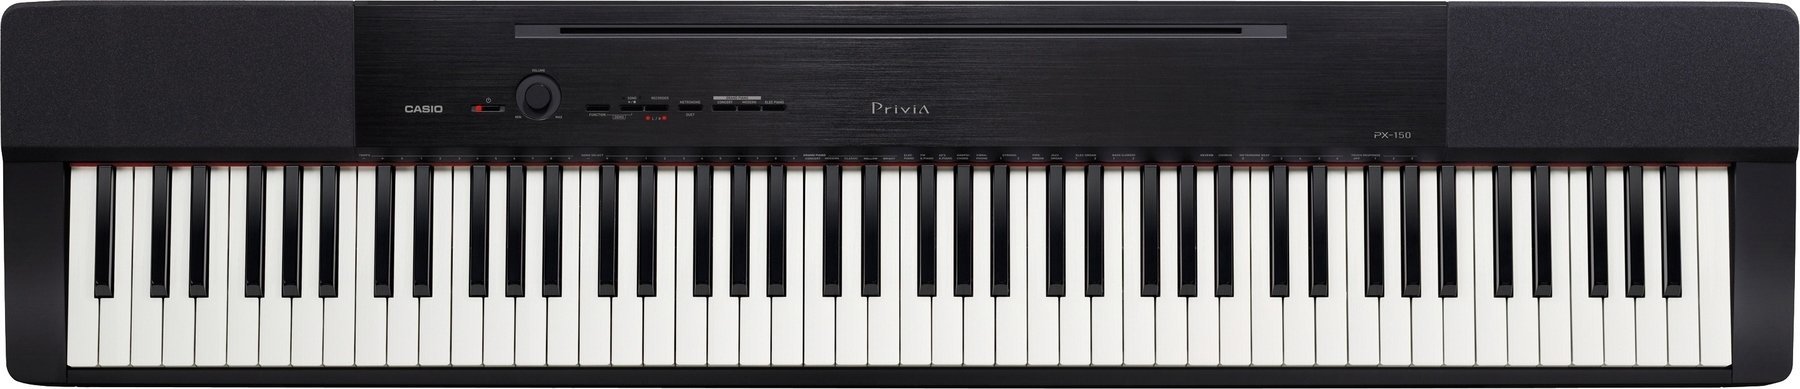 Színpadi zongora Casio PX150 BK Privia